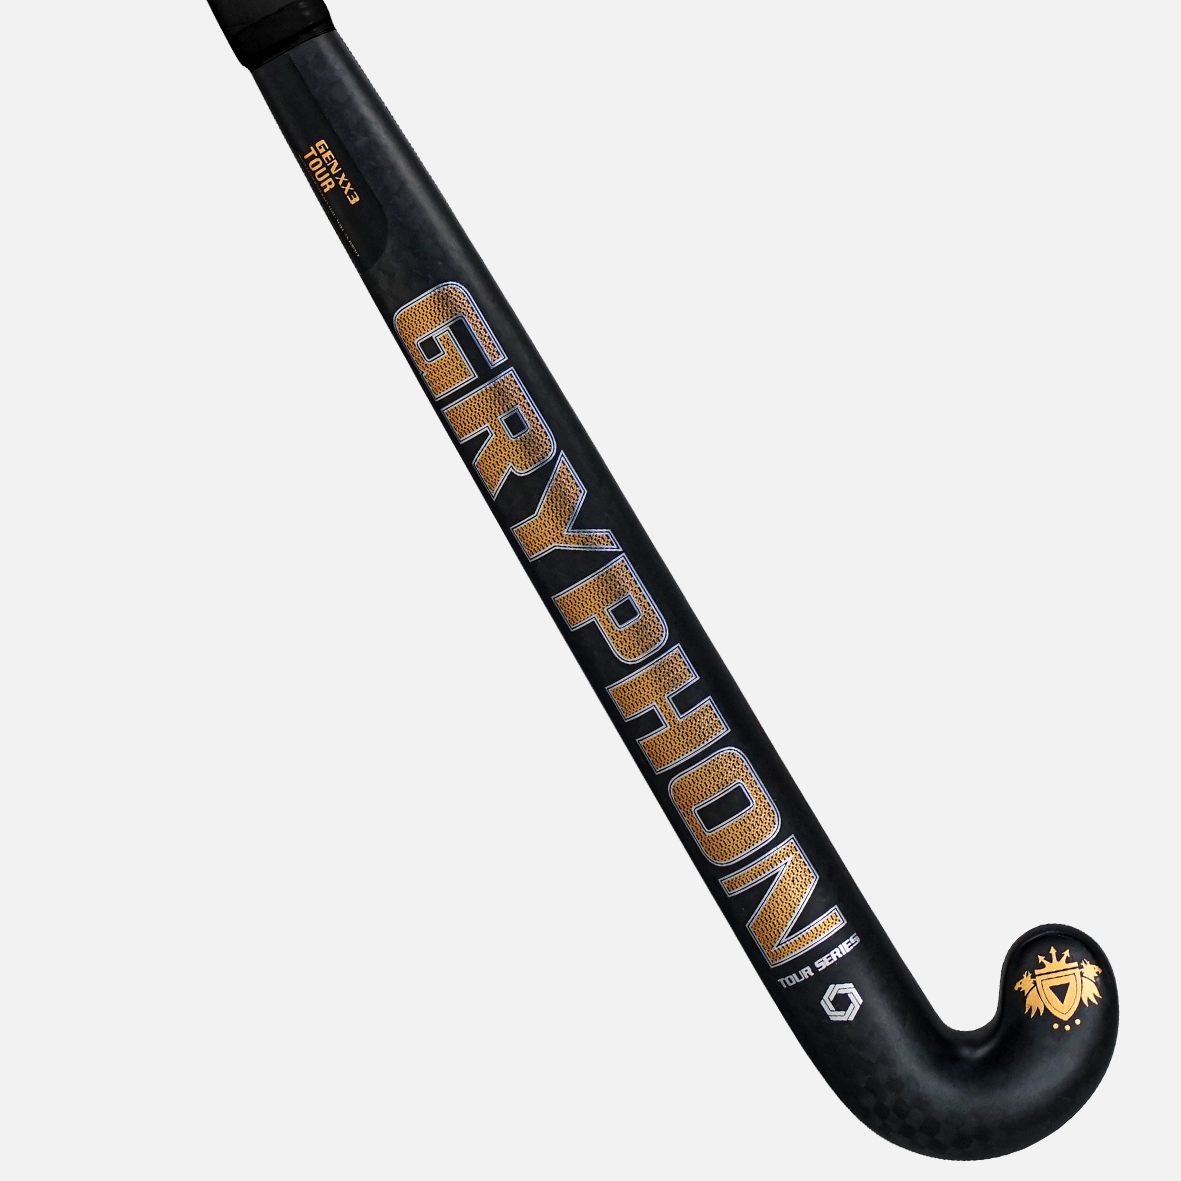 Gryphon Tour GXX3 Hockey Stick